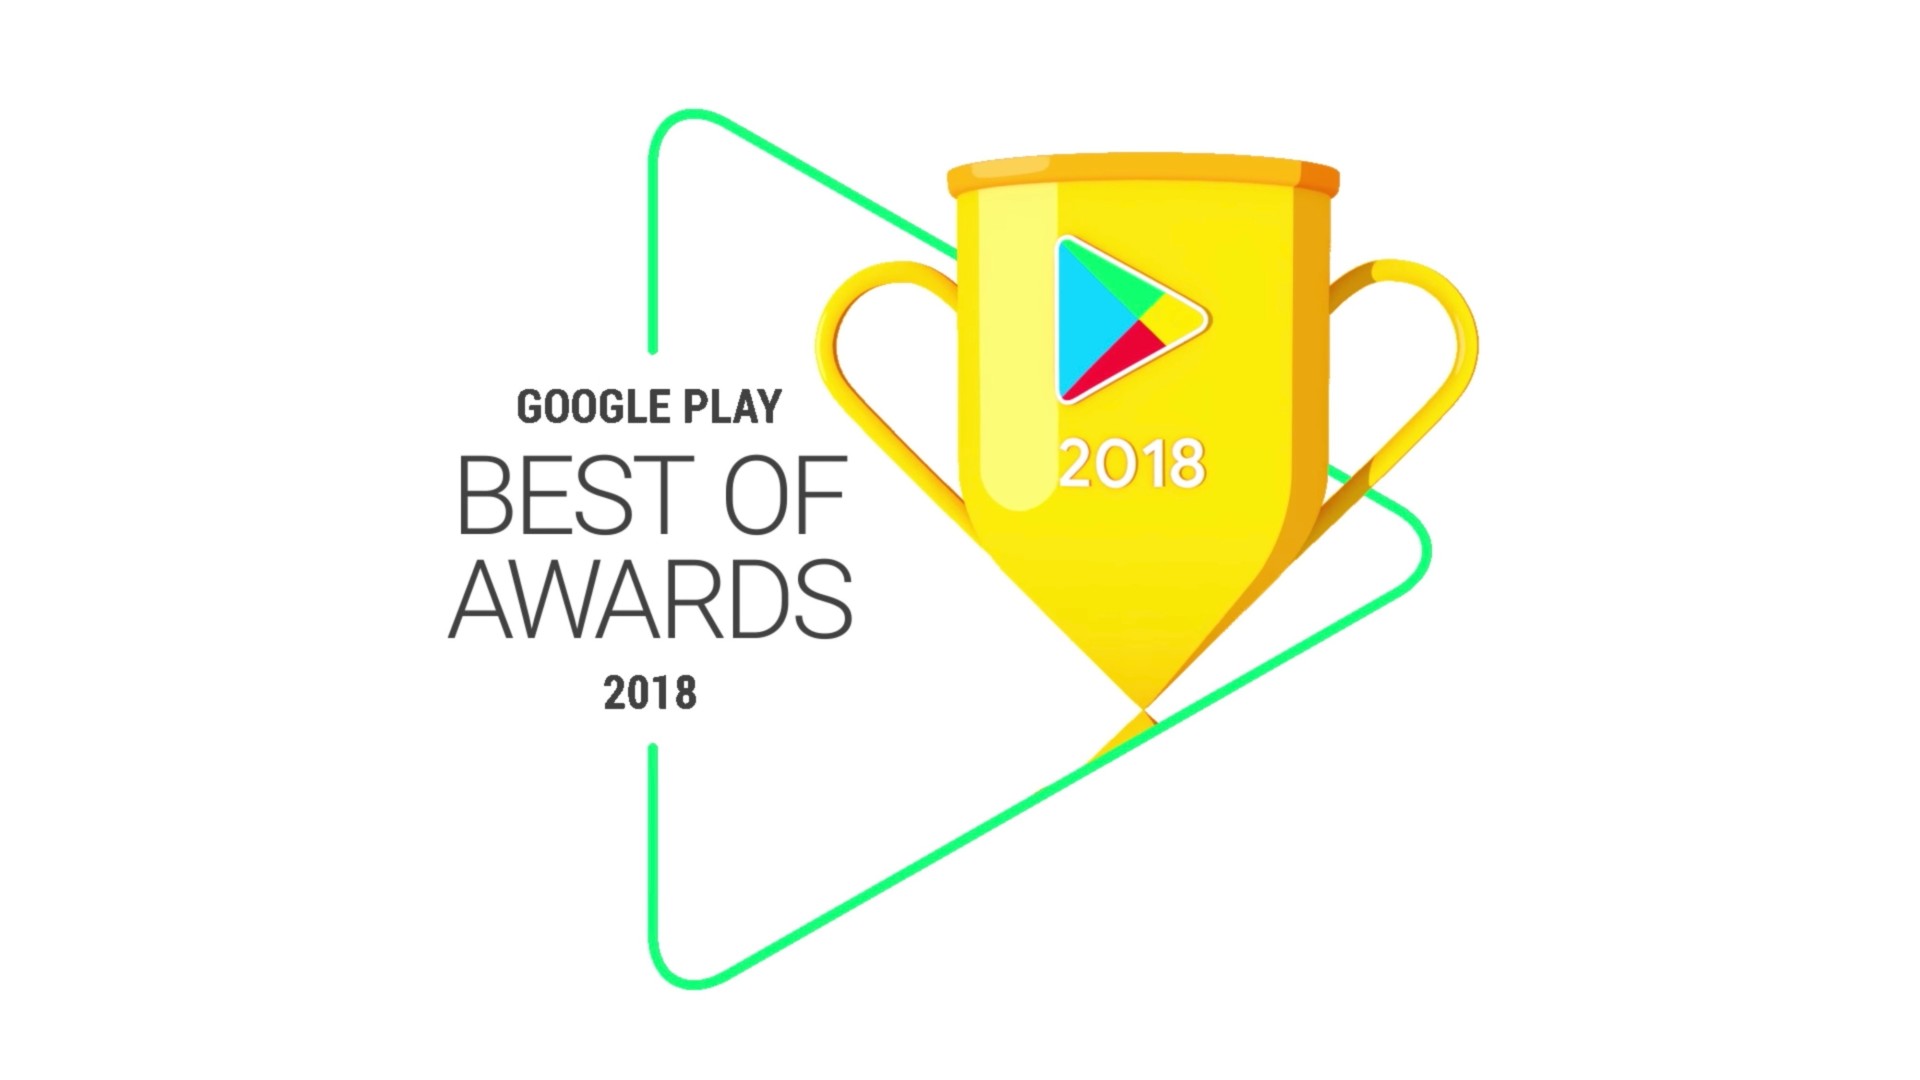 Google Play best of awards 2018